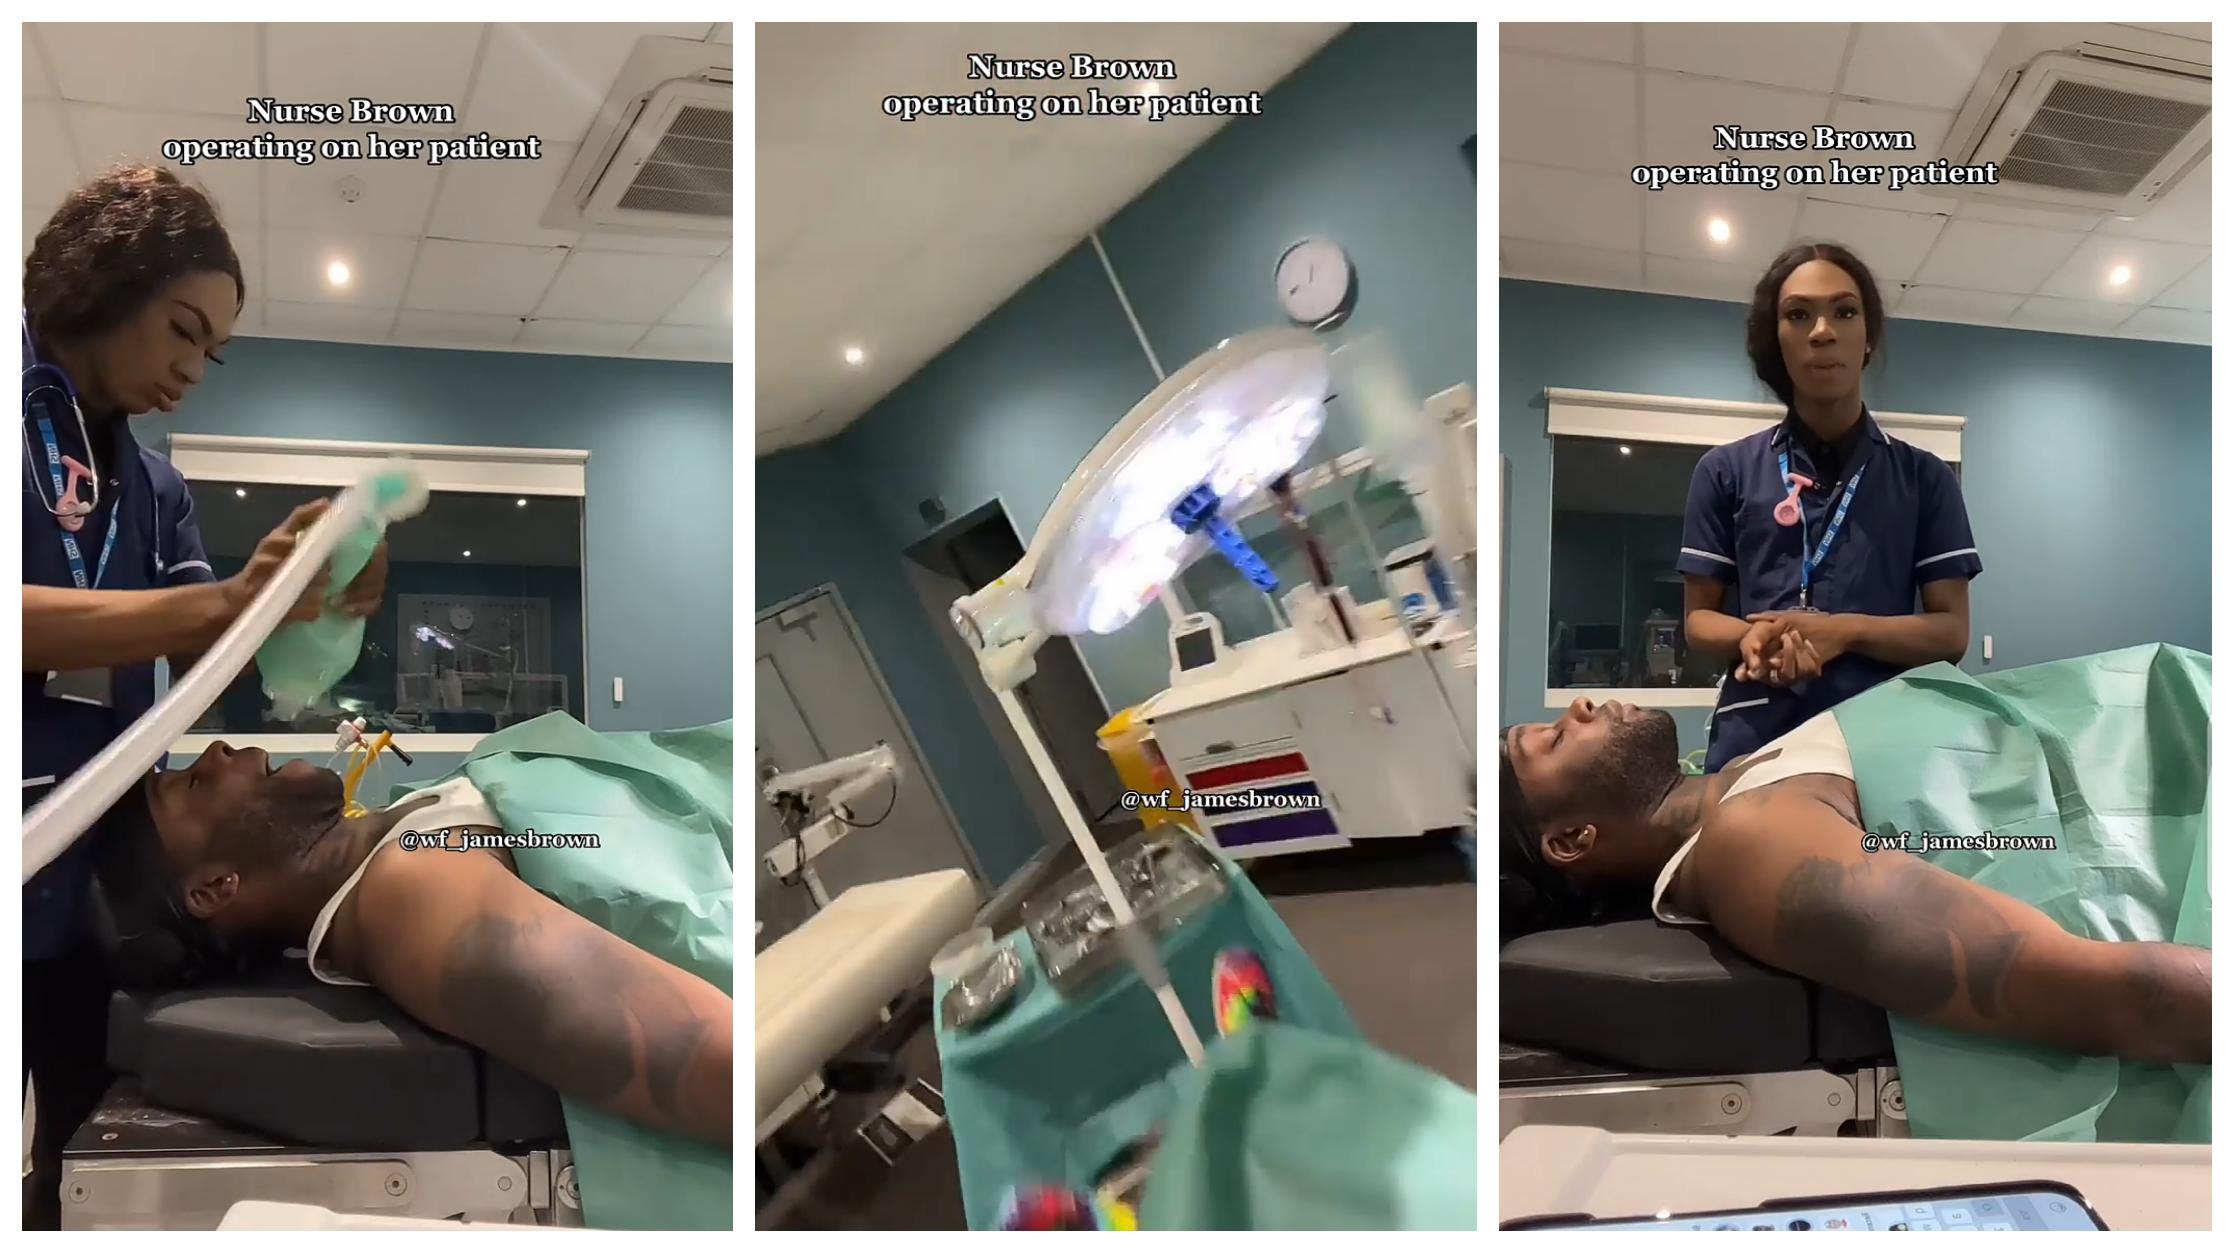 Nigerians react as crossdresser James Brown operates on a sick patient's - video